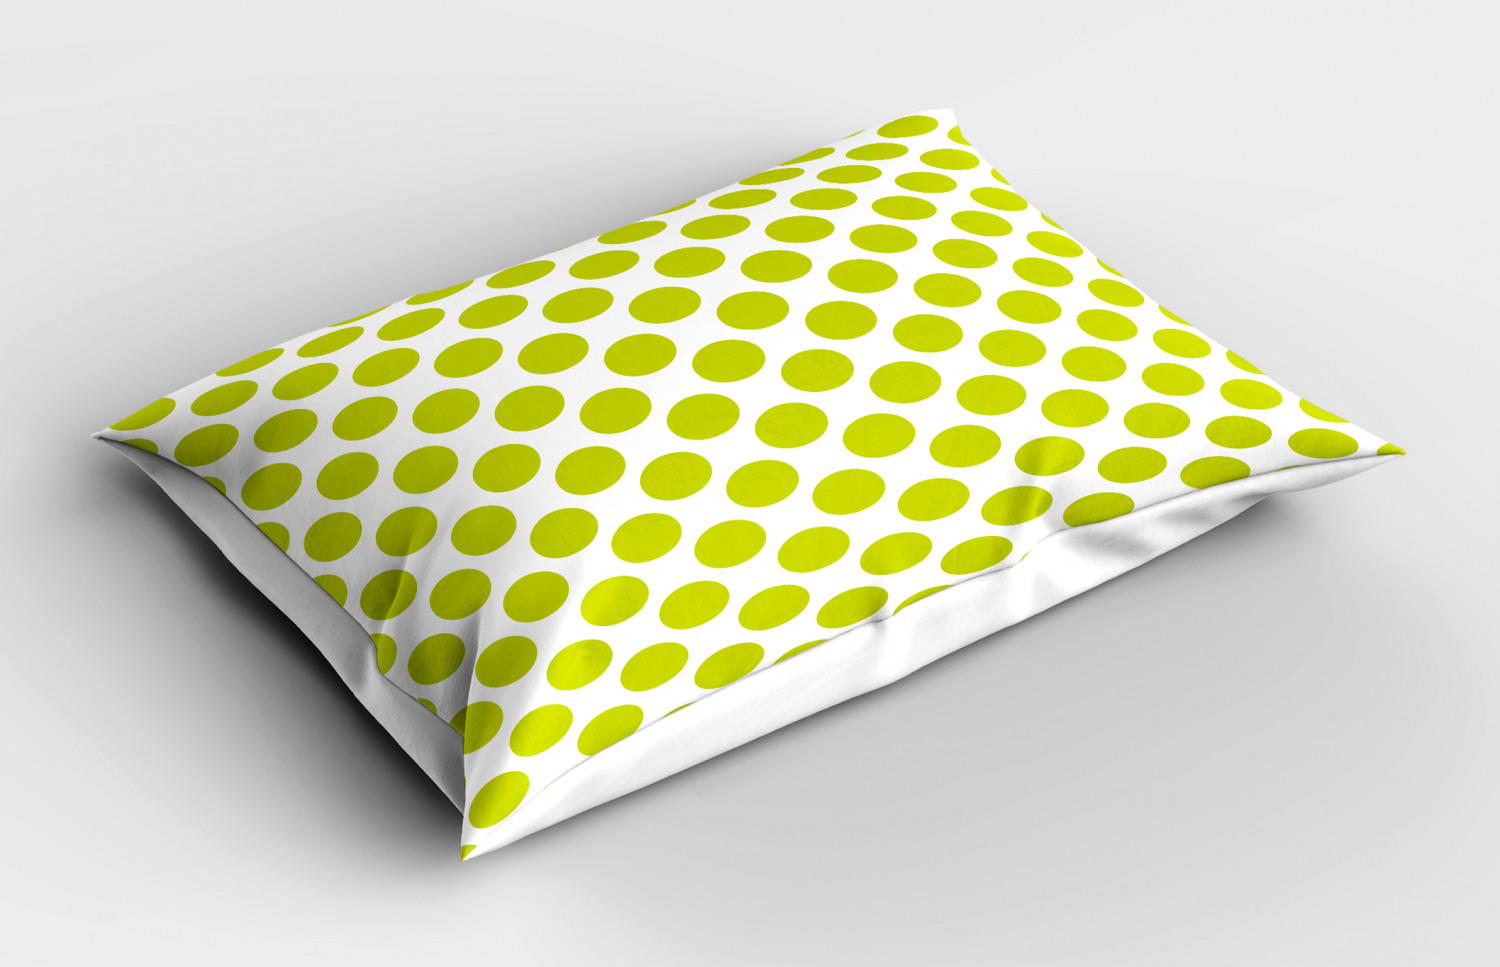 lime green pillow shams